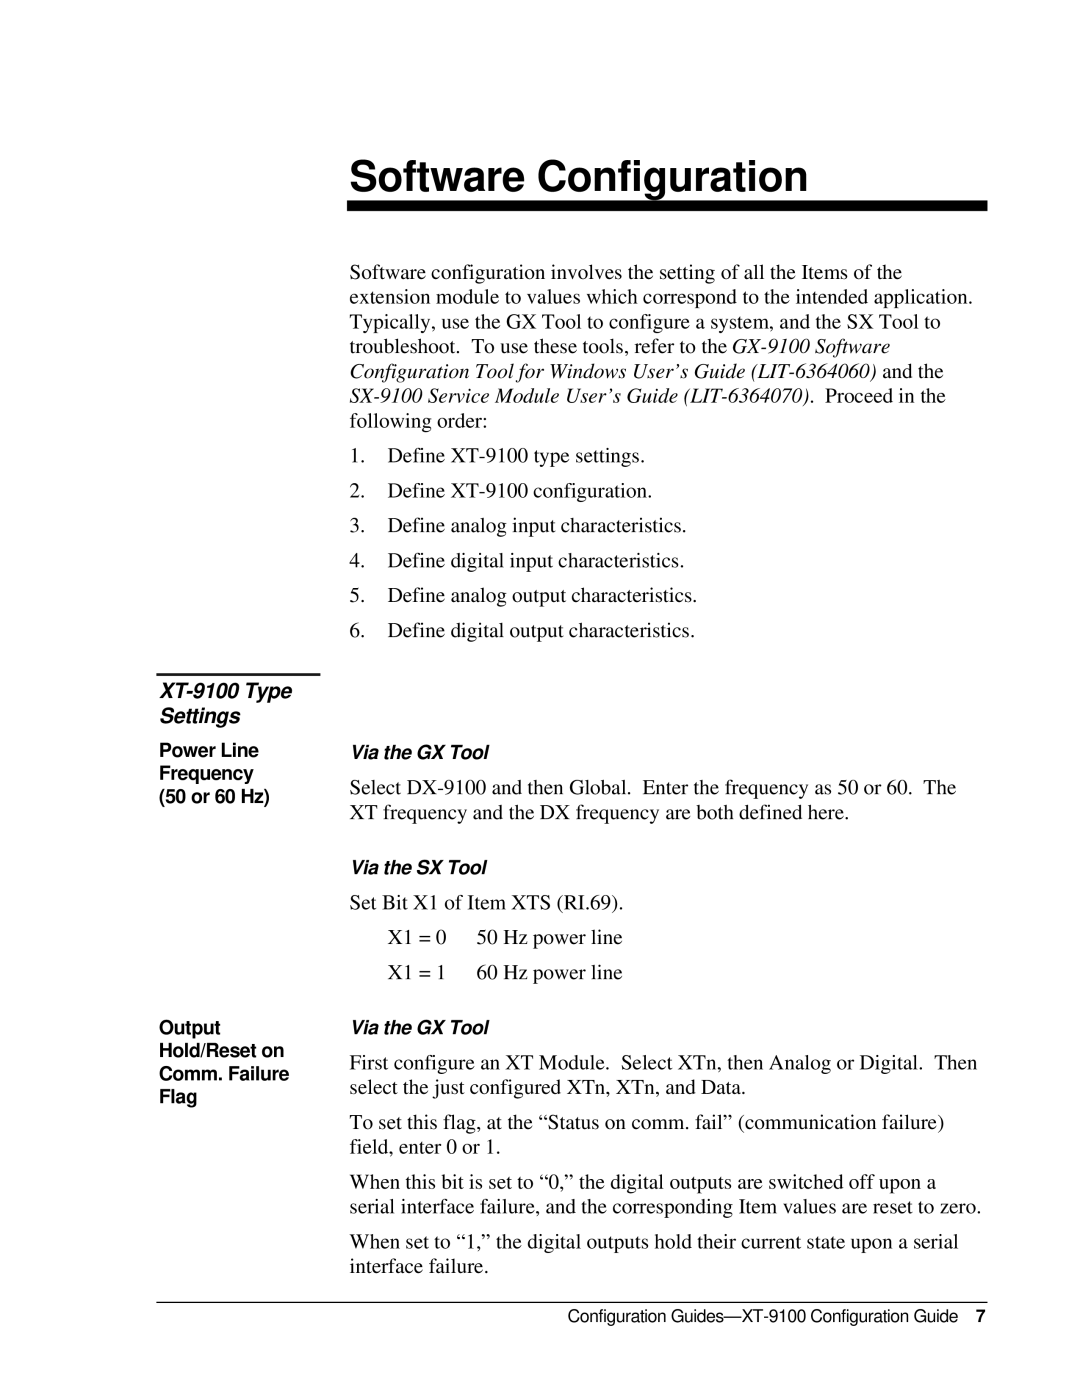 Johnson Controls XP-910x appendix Software Configuration, XT-9100 Type Settings 